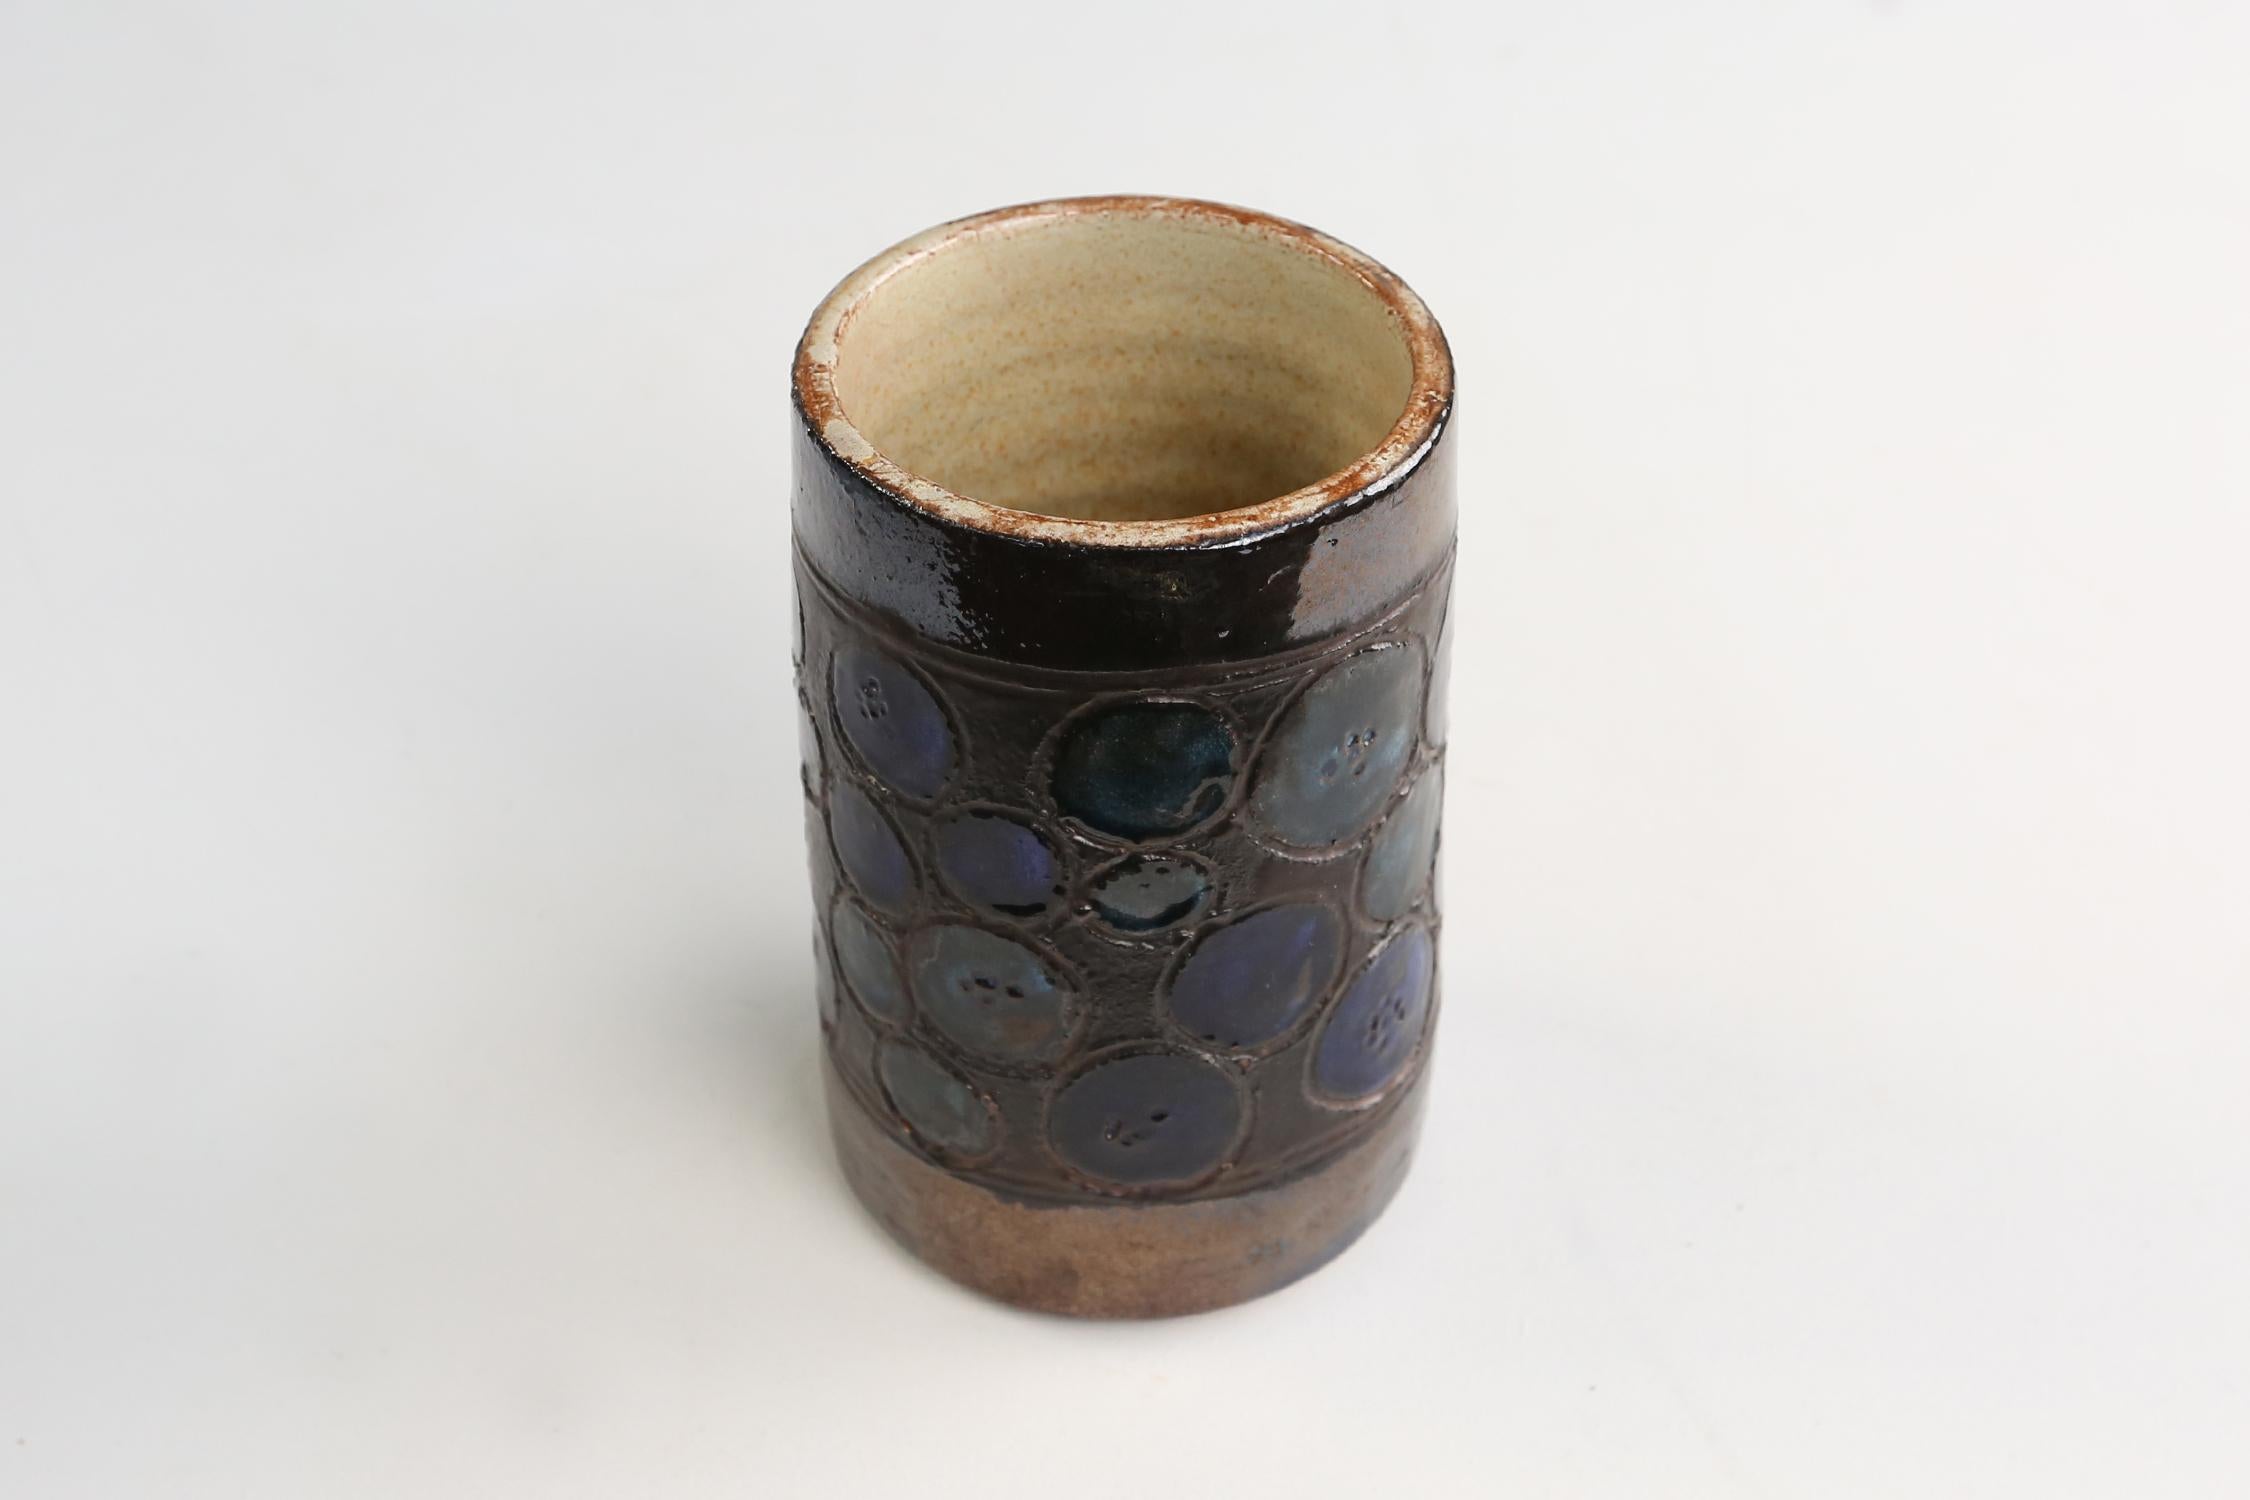 Ceramic vase made in the 1960's by Belgian ceramist Perignem.
Has some nice blue colors.